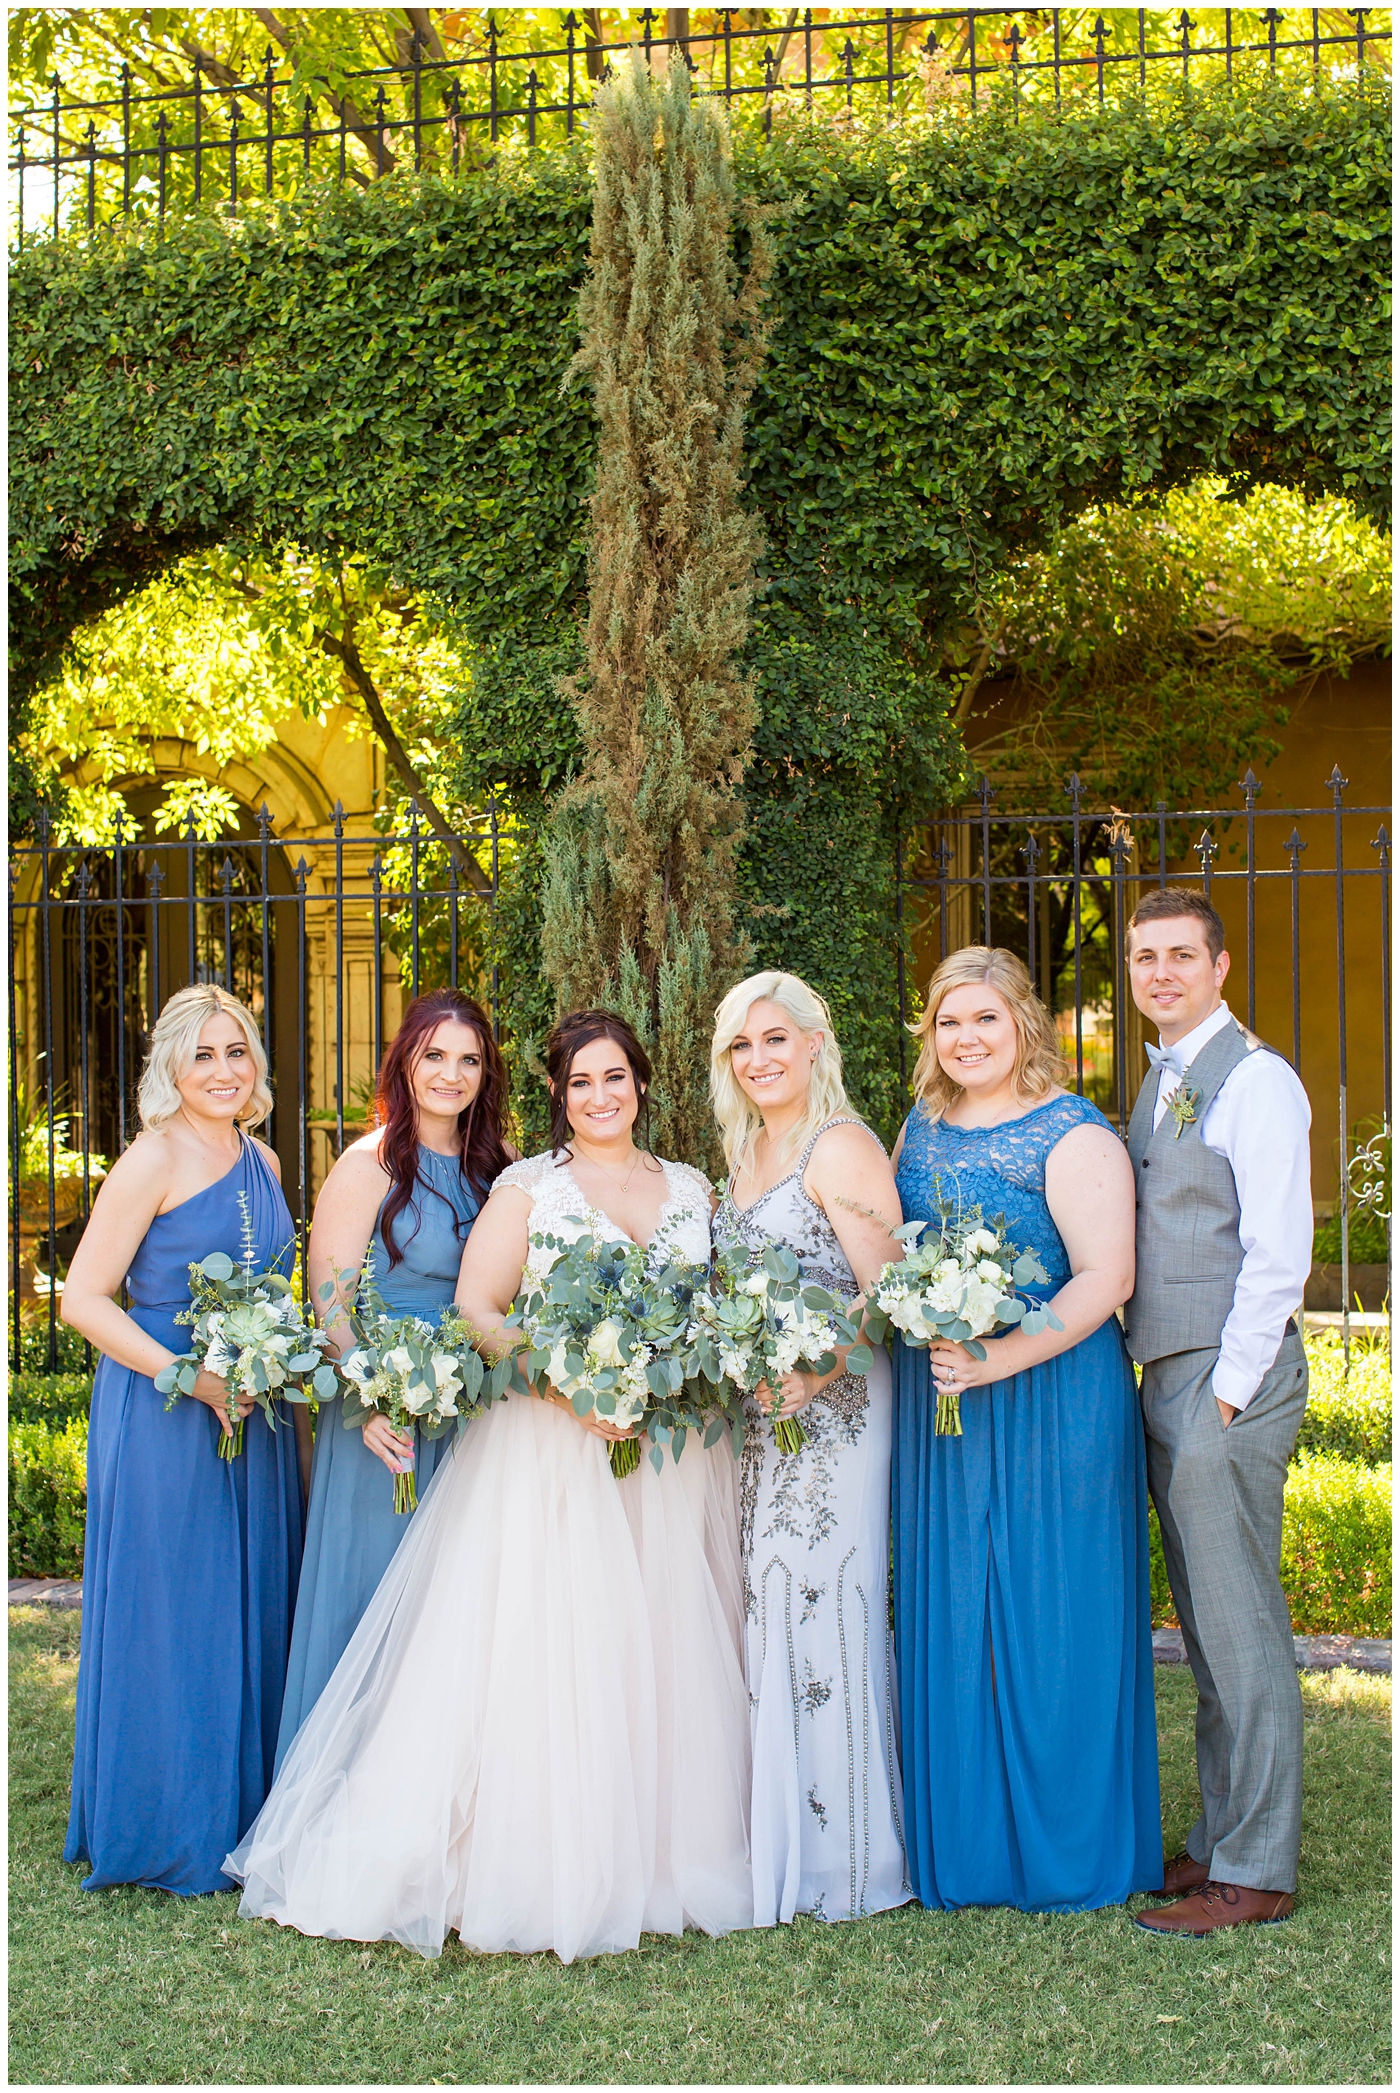 Bridesmaids and bridesman in gray and blue